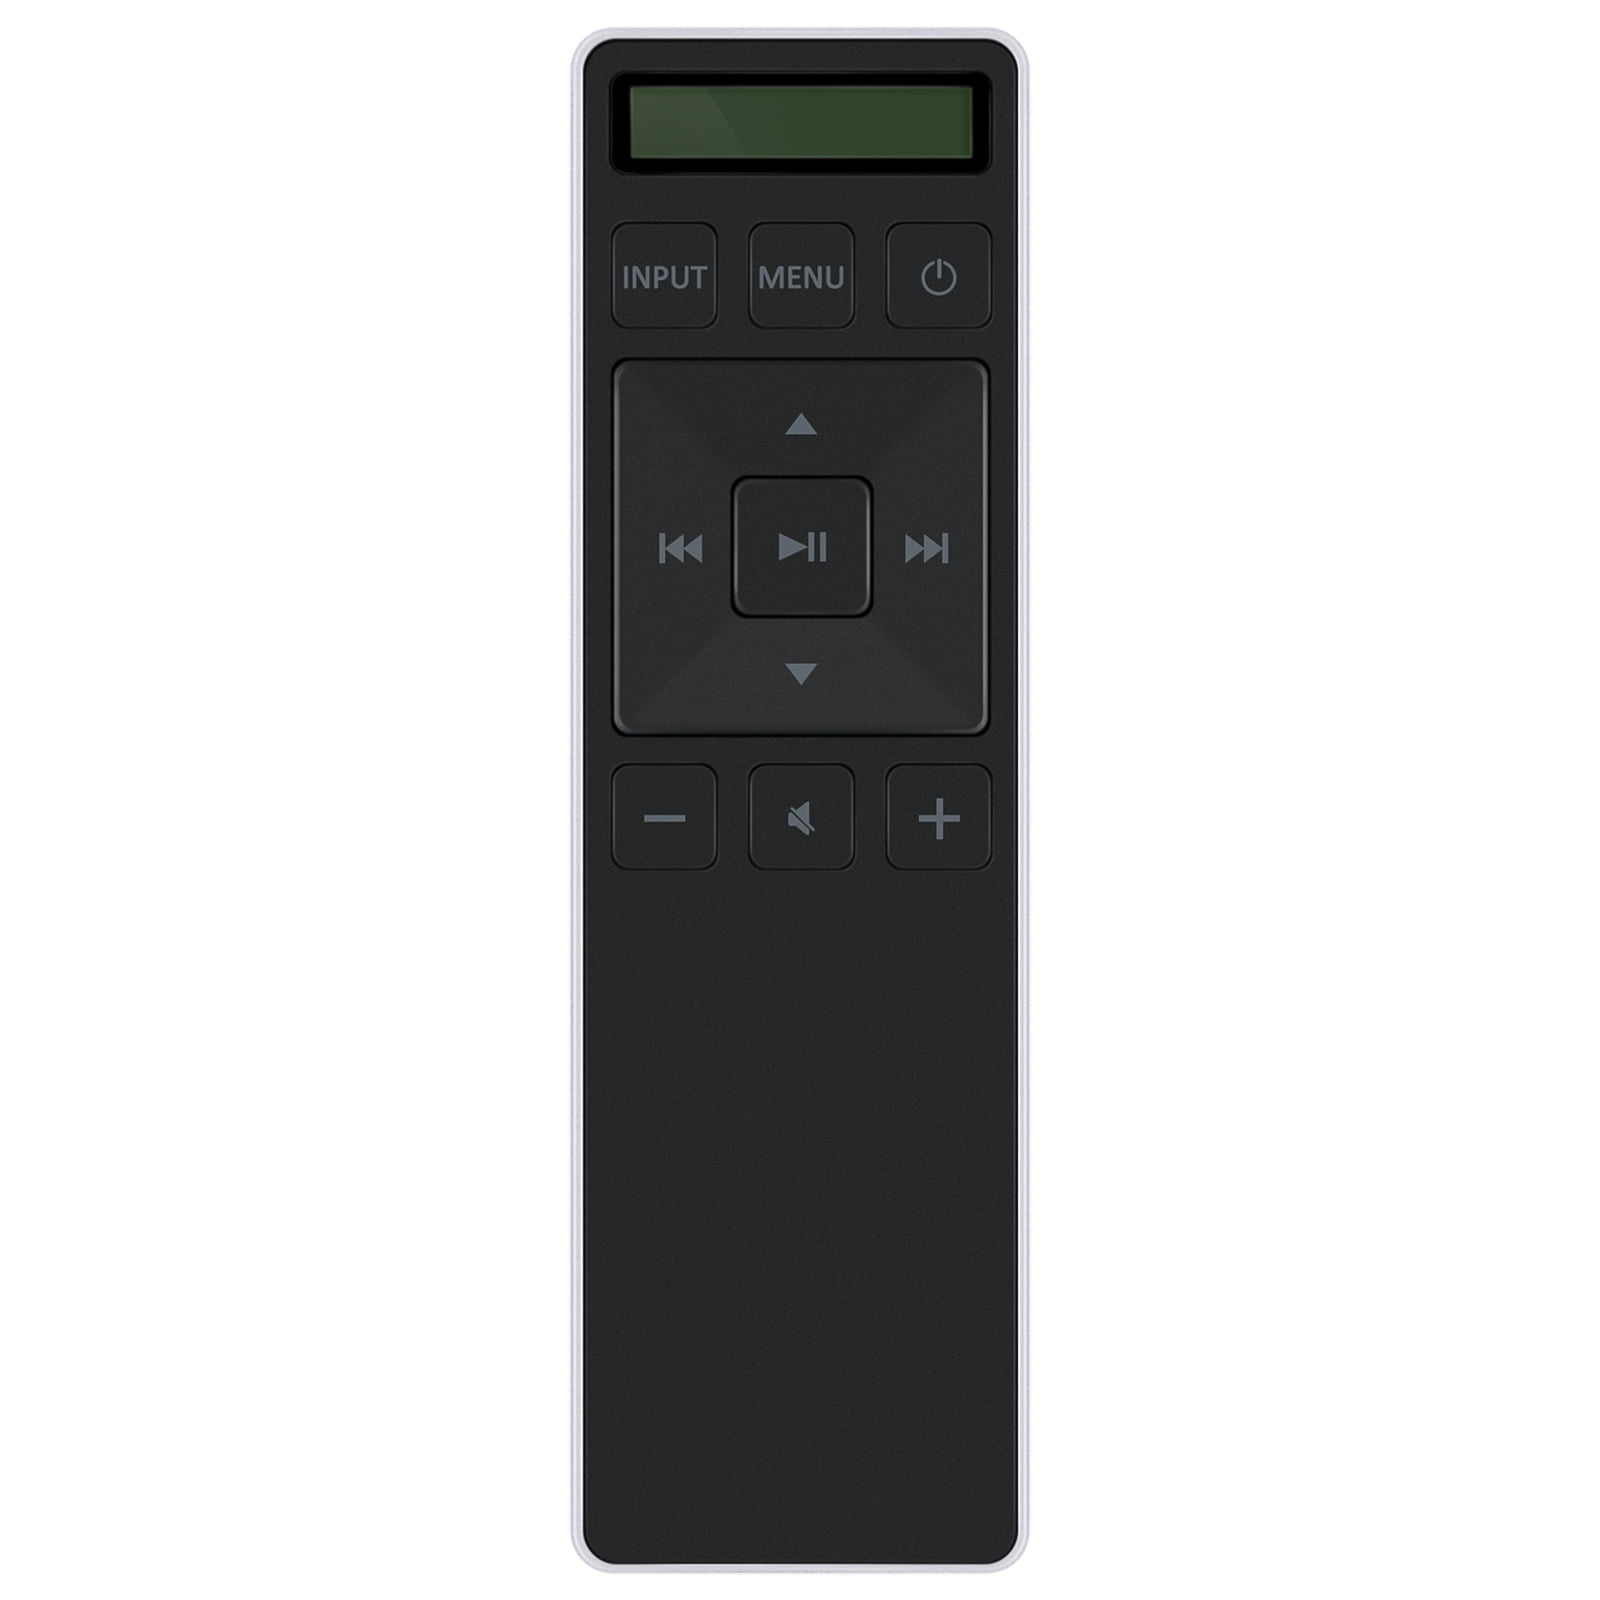 Vizio XRS551-C Remote Control With Display for SB4051-C0 & SB3851-C0 Sound Bar 